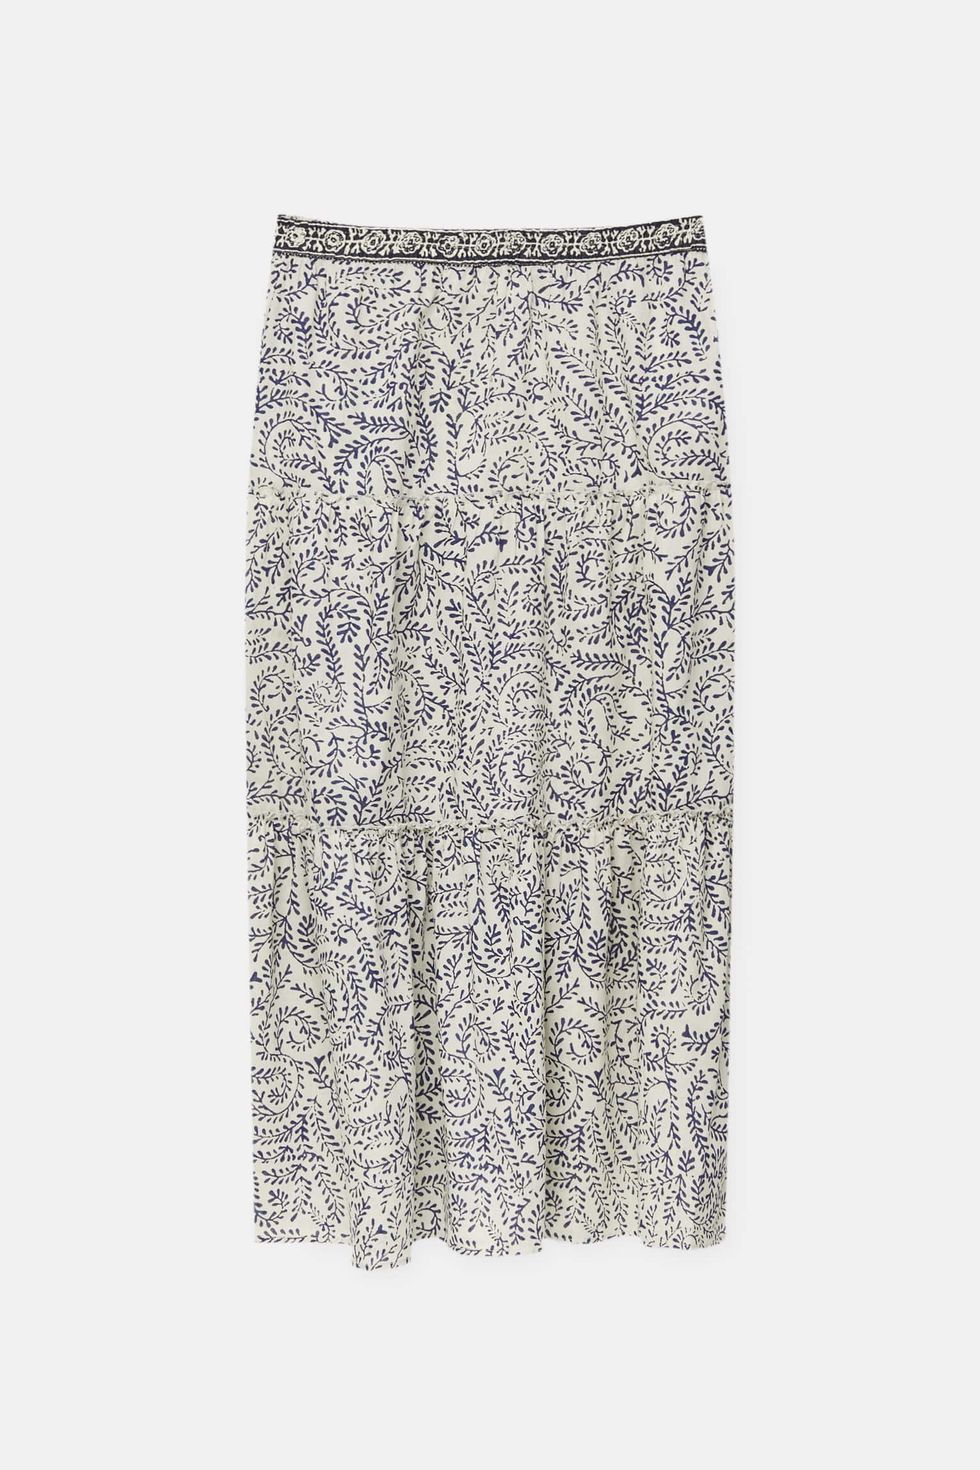 falda bohemia esstampada